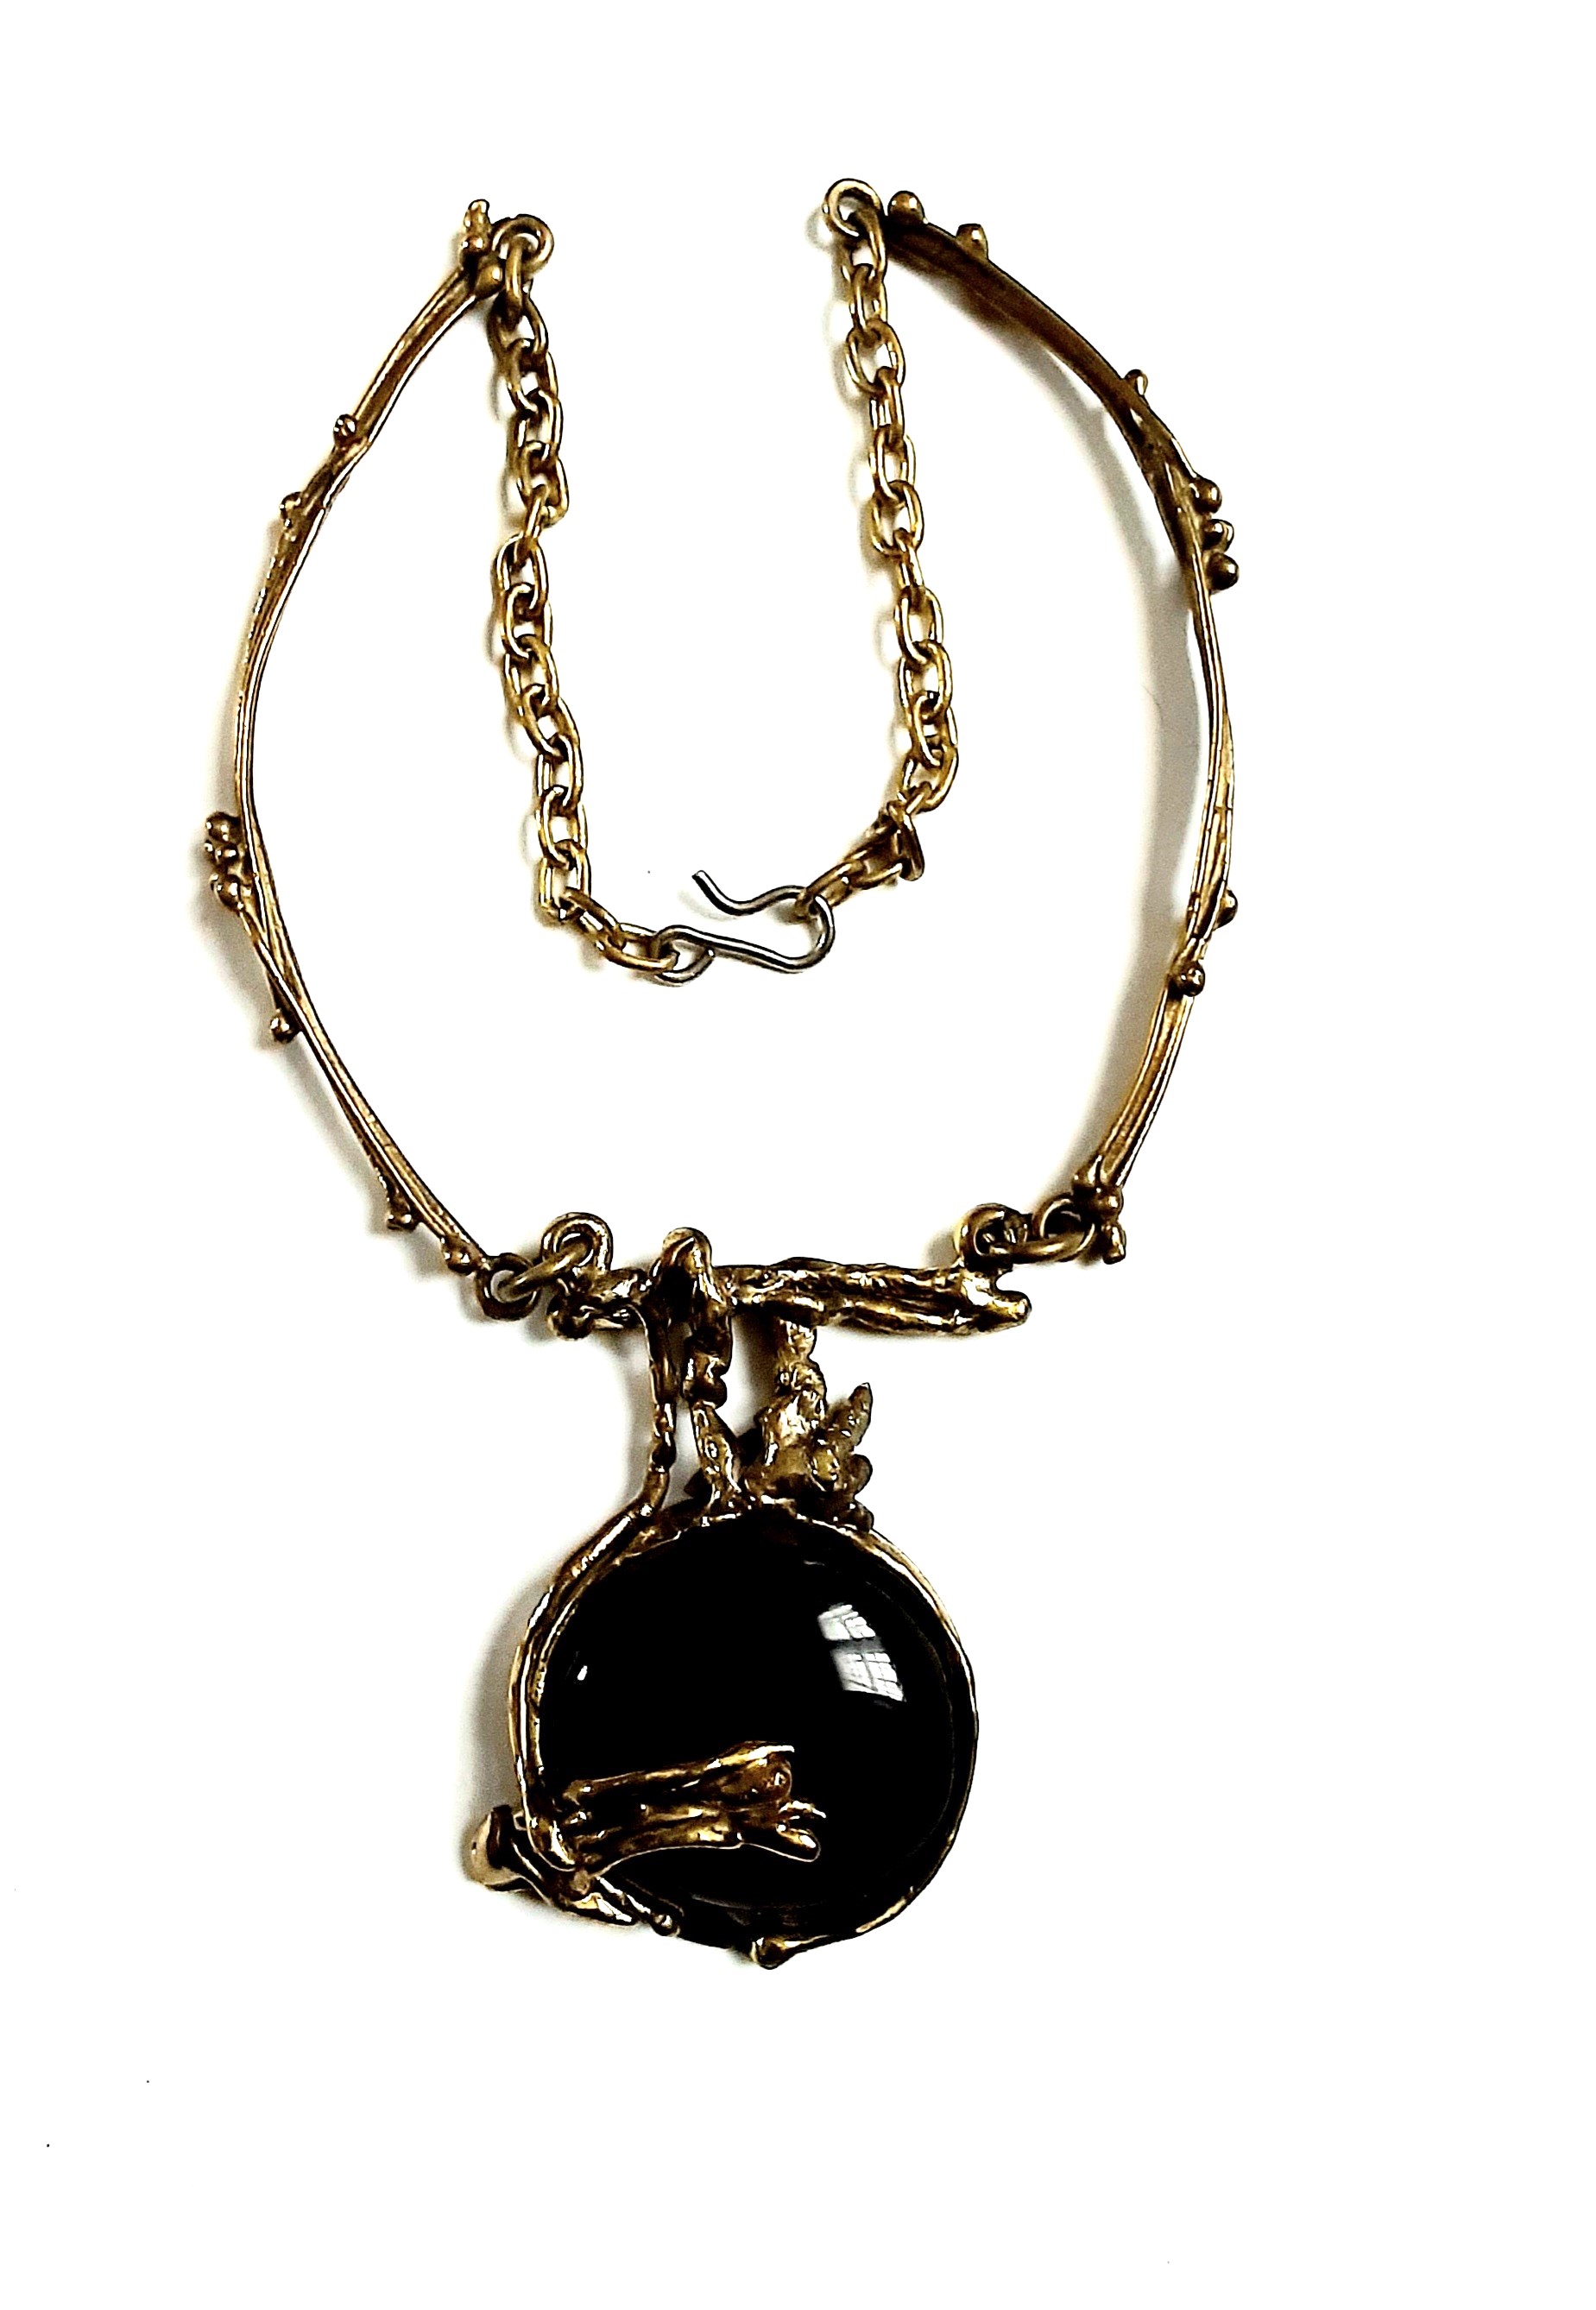 glass and brass modernist/brutalist necklace